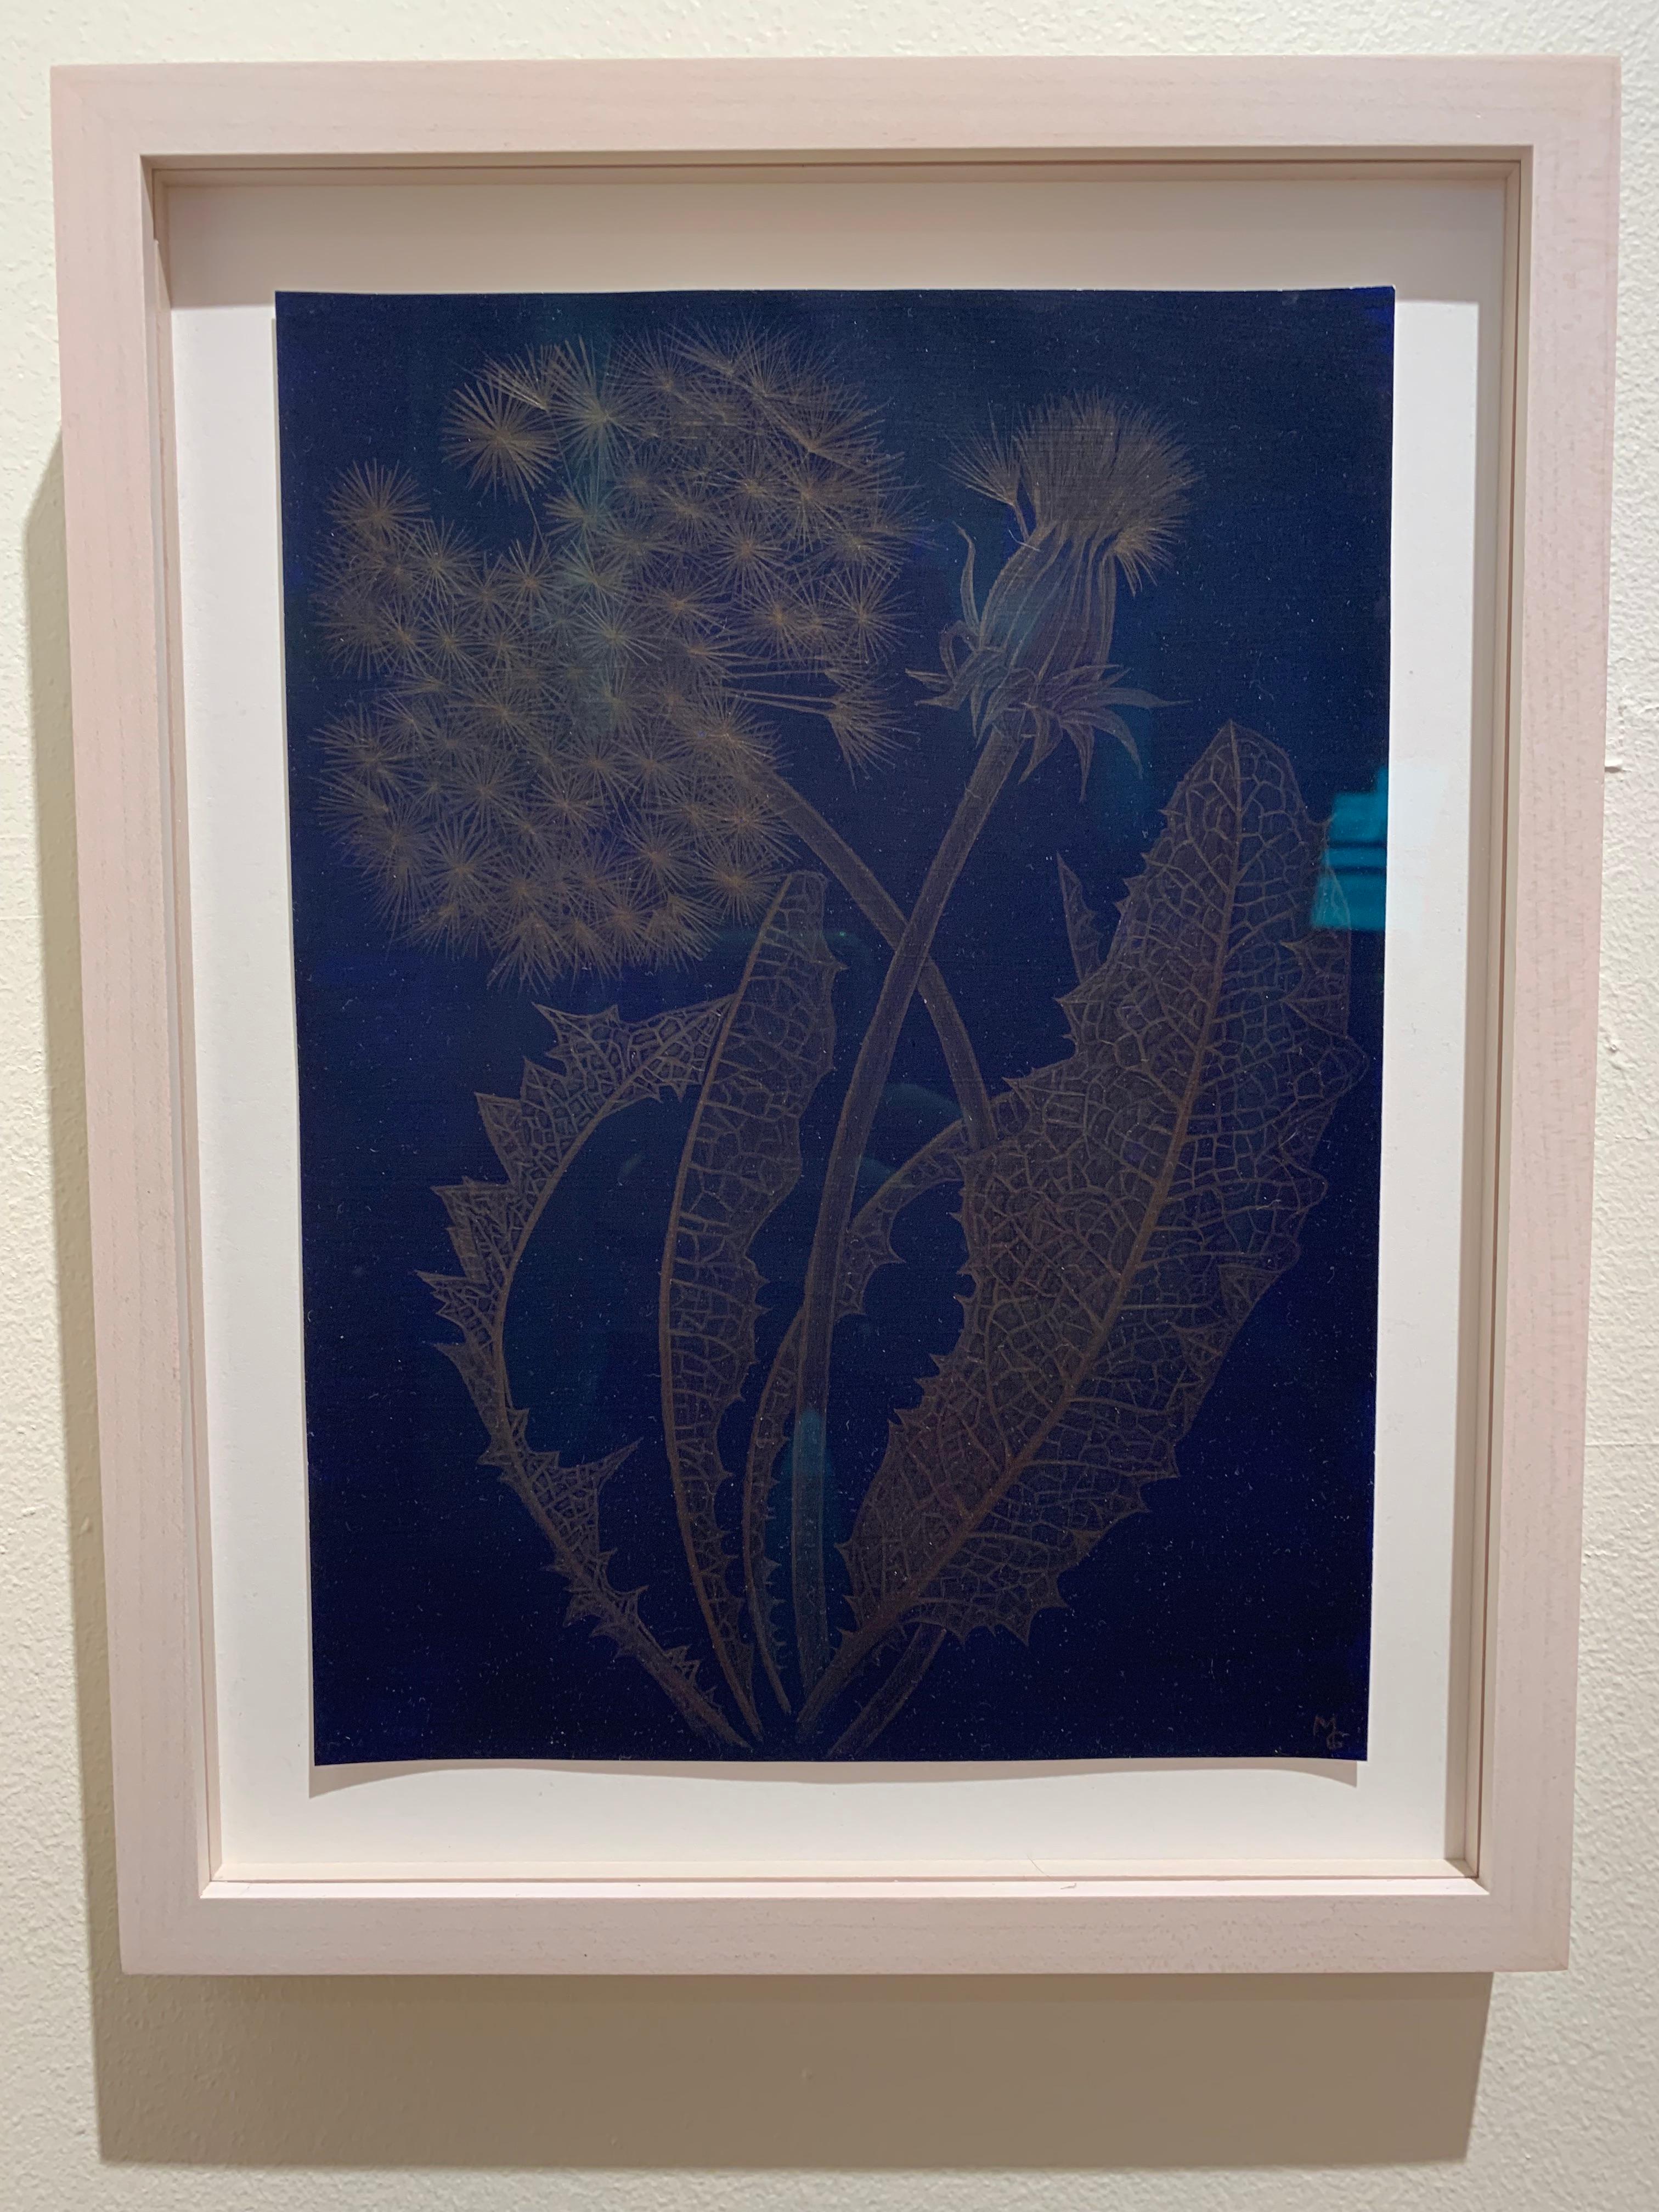 Margot Glass, Blue Dandelion, realist gold point still-life drawing, 2019 1